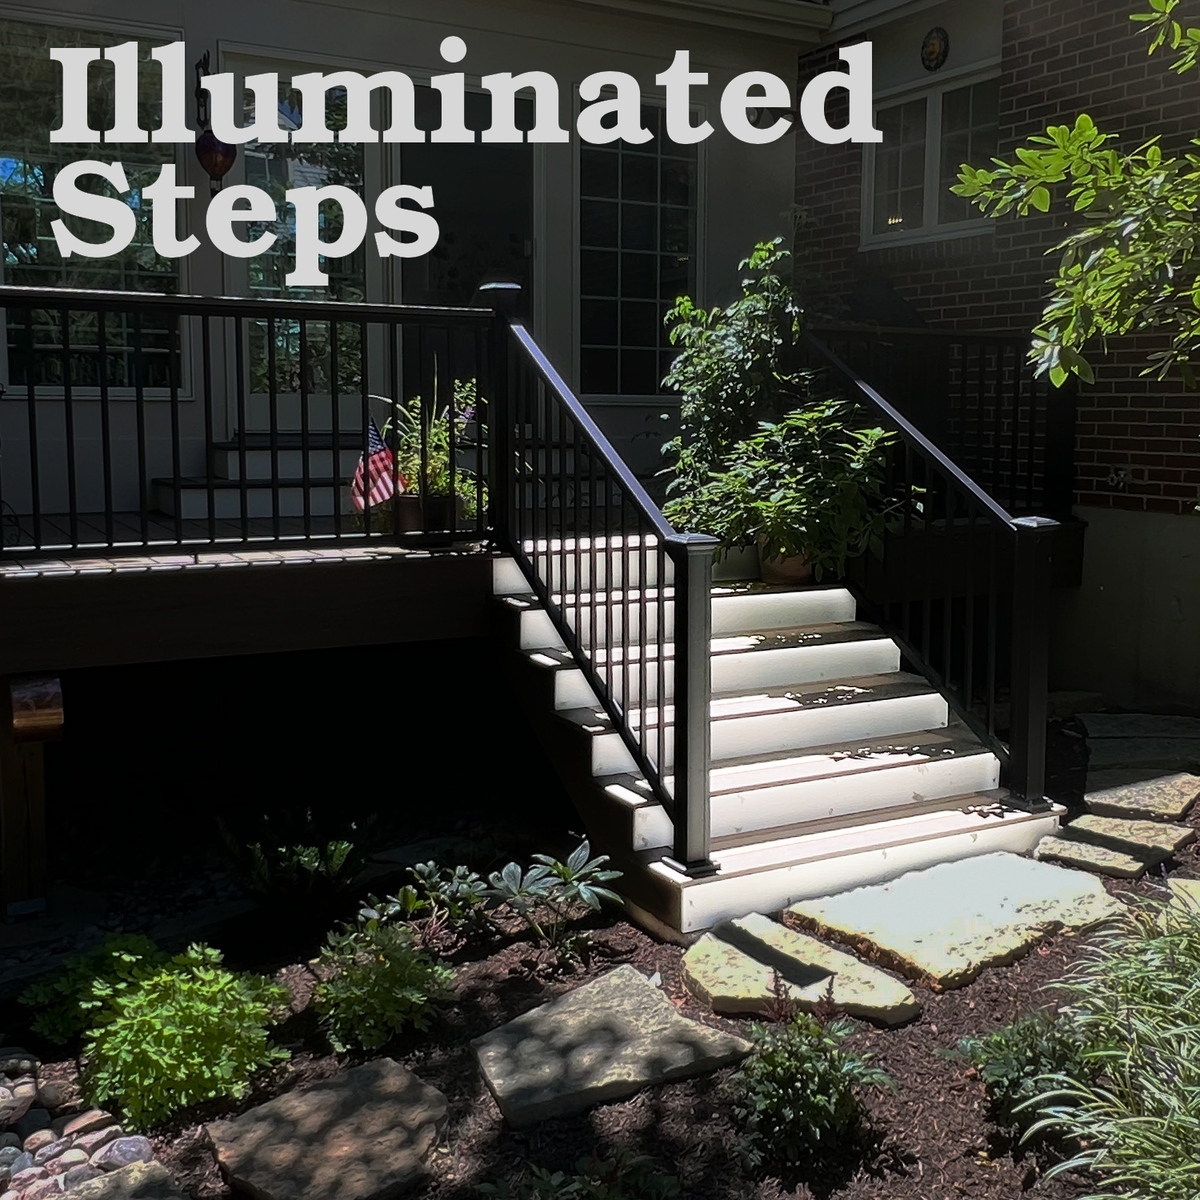 Illuminated steps